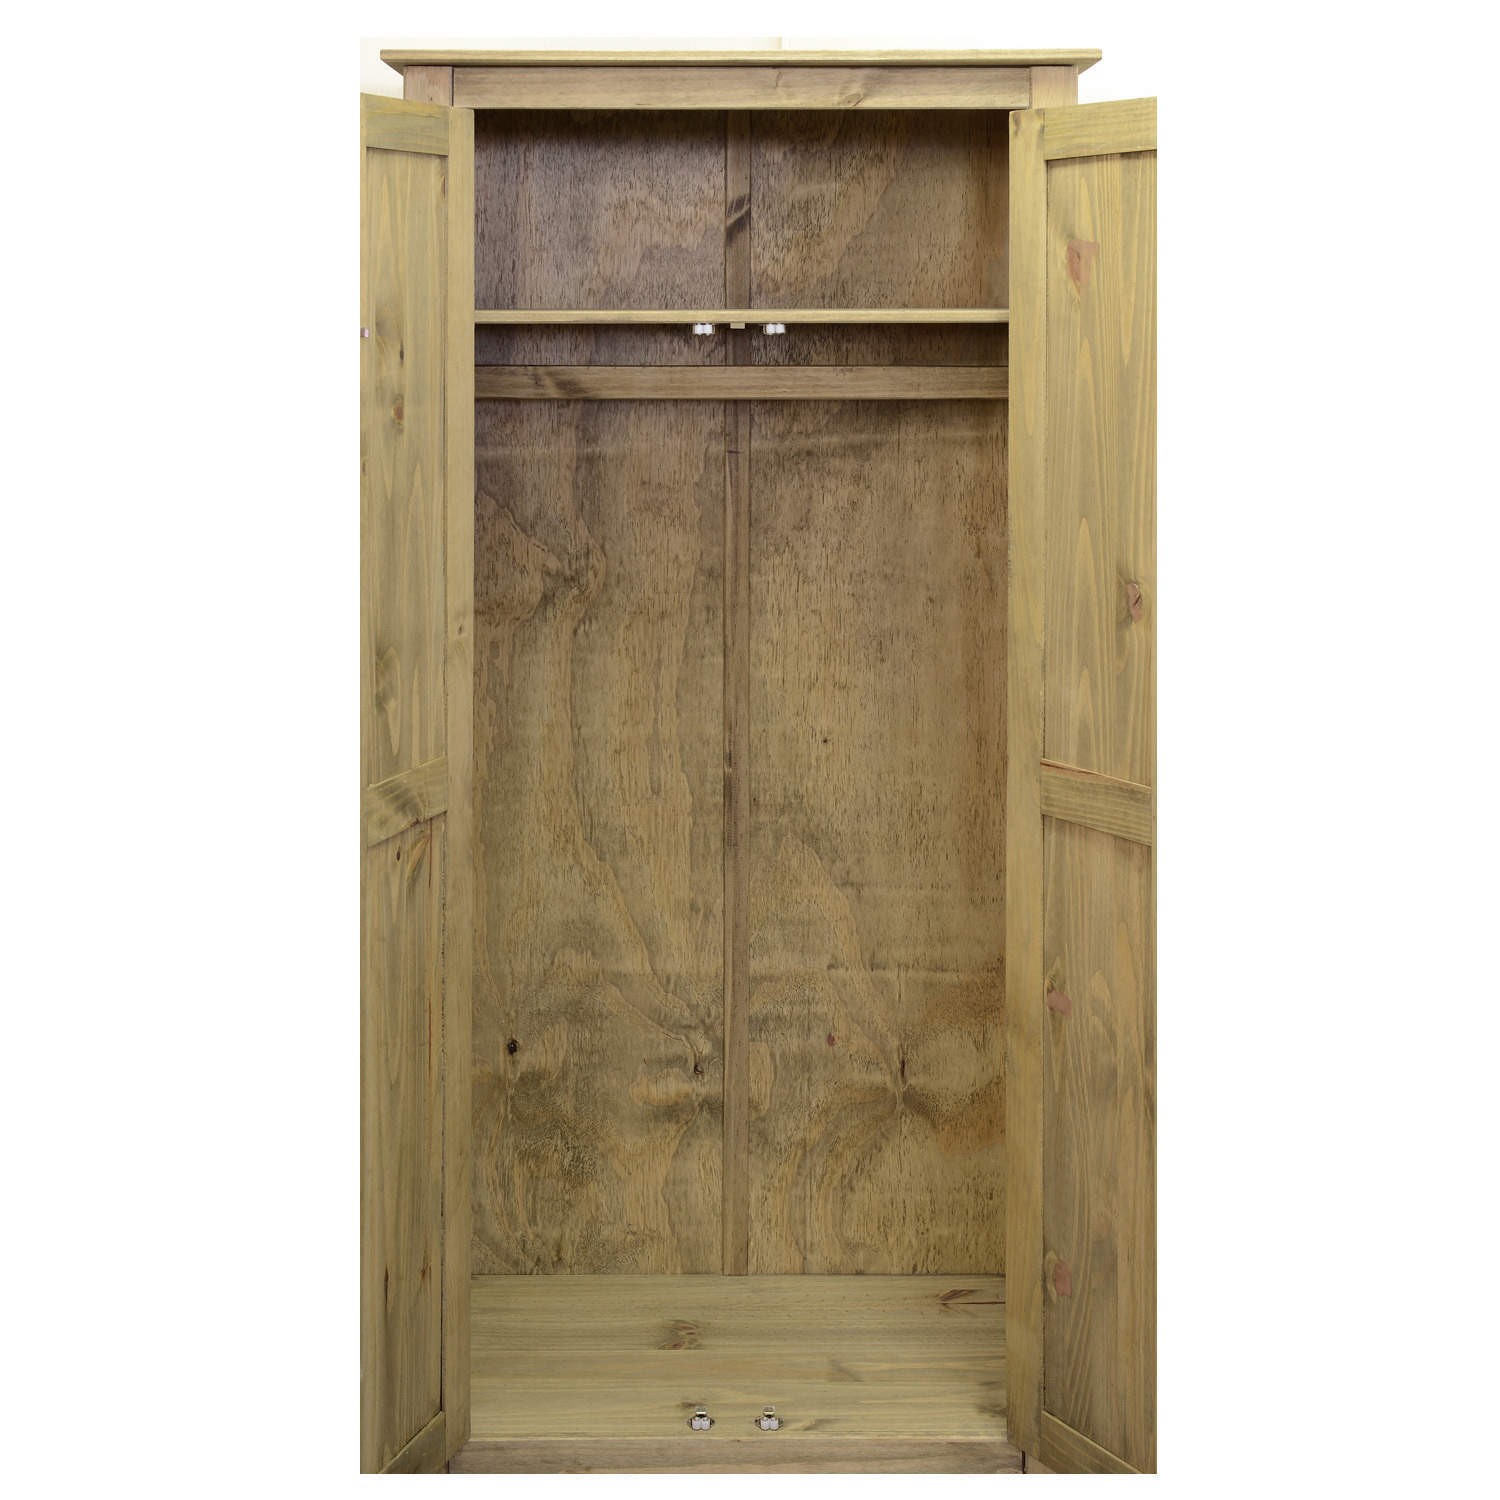 Read more about Solid pine 2 door double wardrobe panama seconique